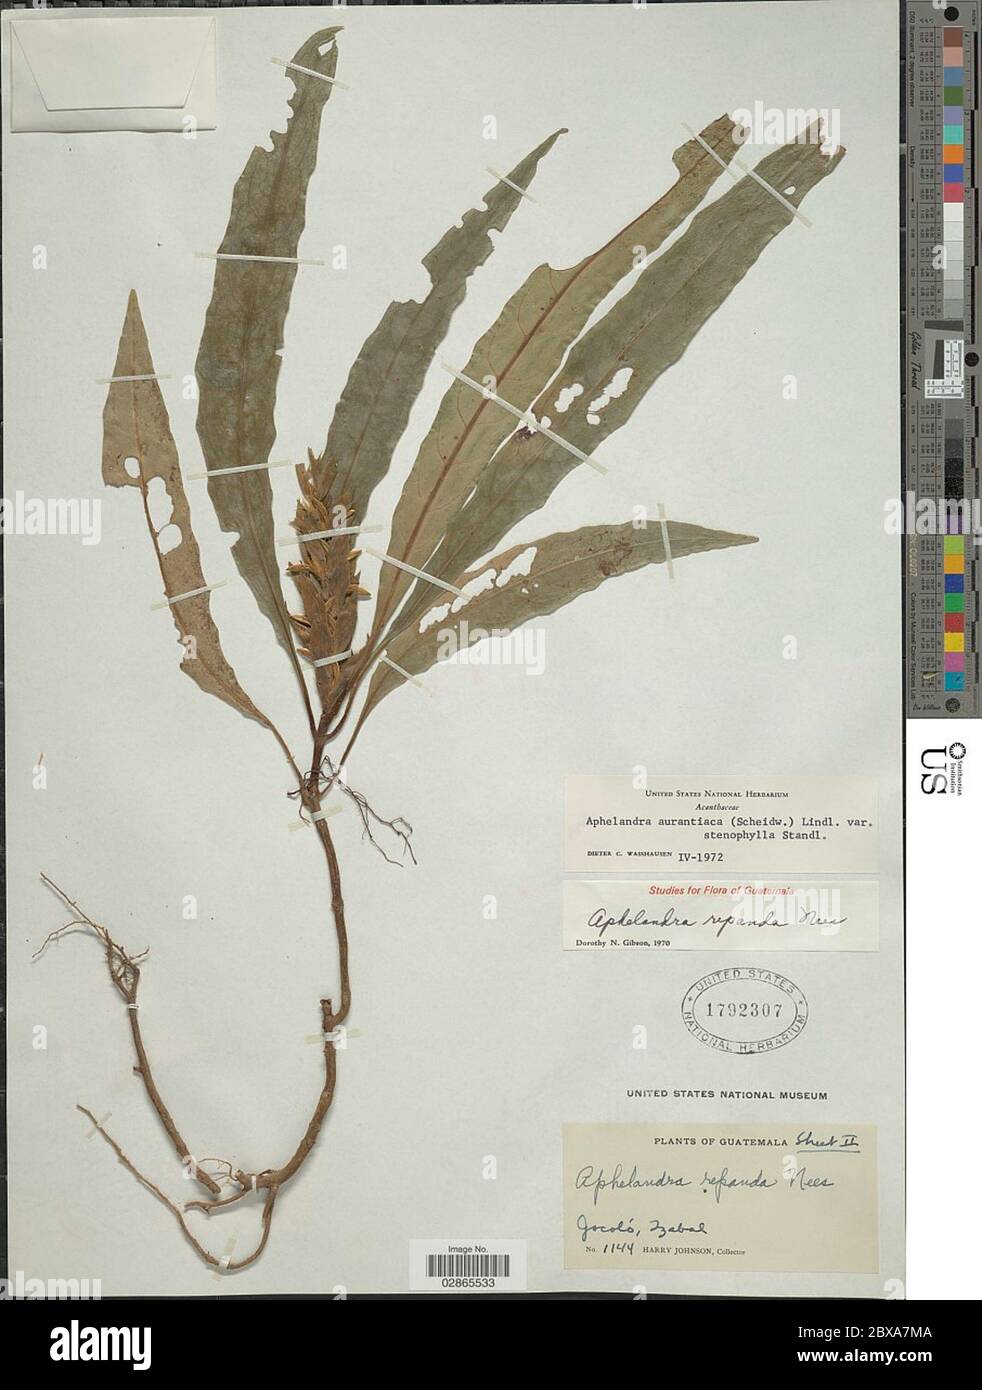 Aphelandra aurantiaca var stenophylla Standl Aphelandra aurantiaca var stenophylla Standl. Stock Photo